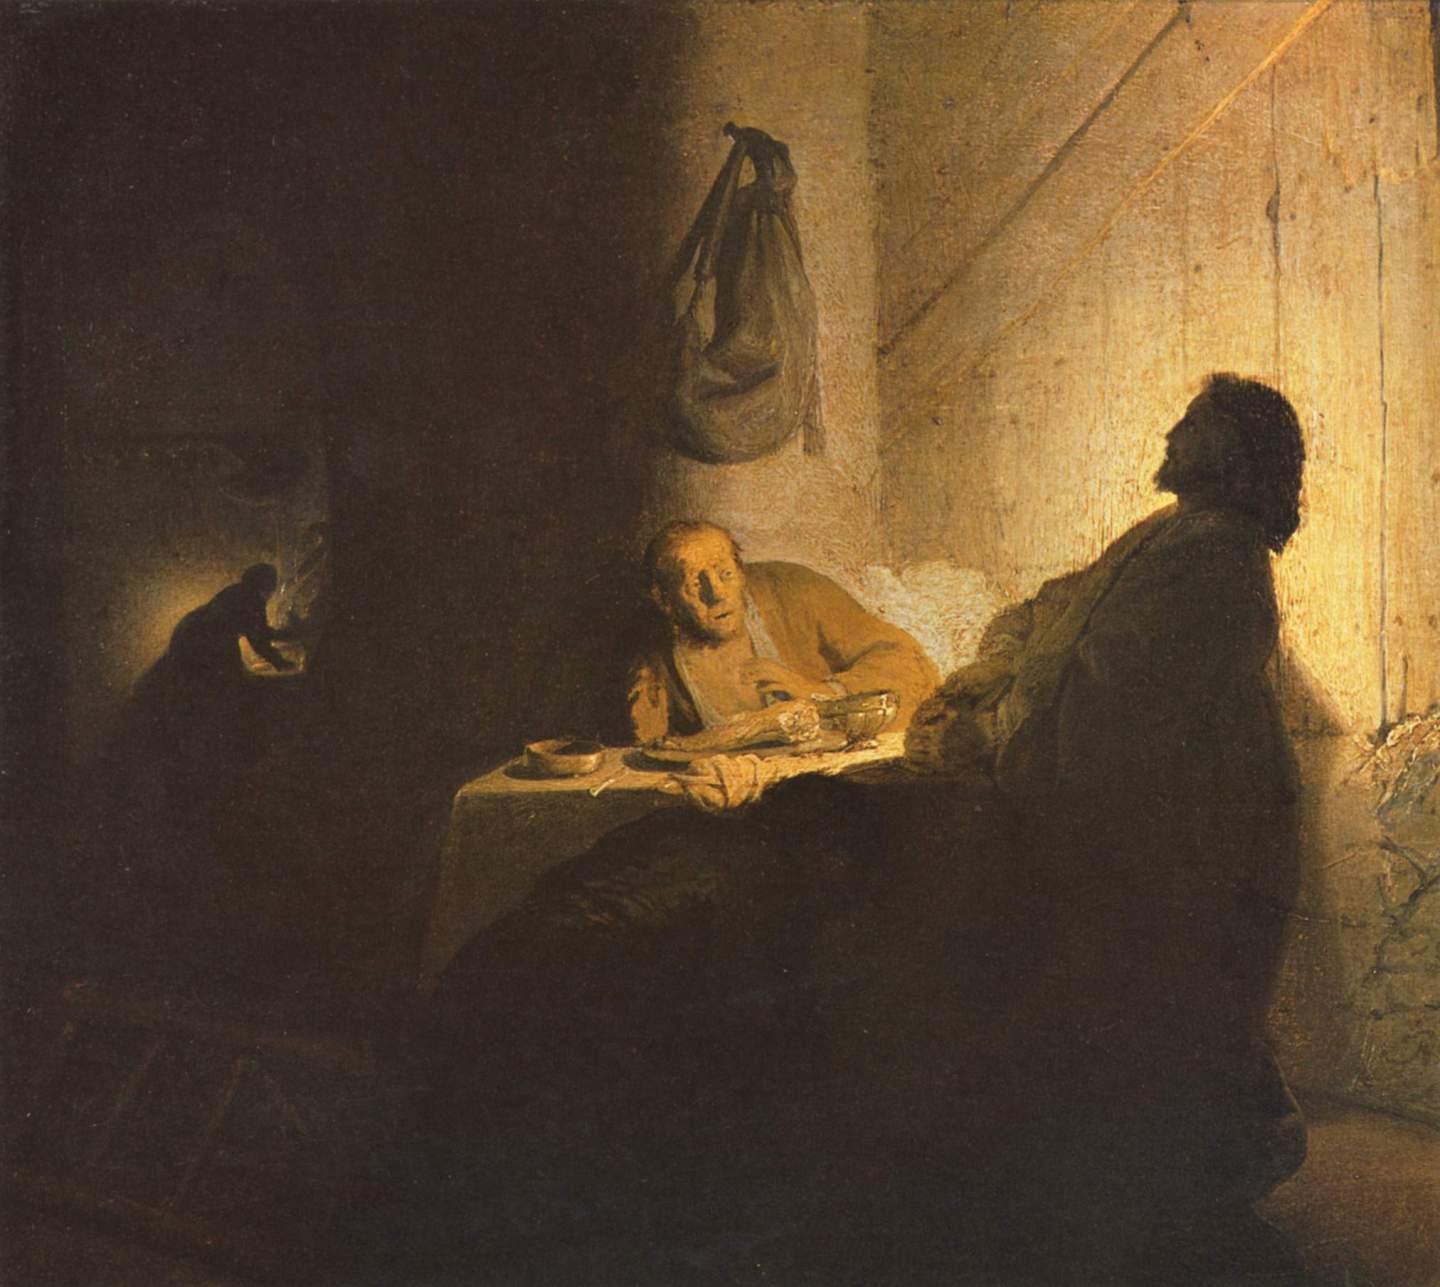 Rembrandt's portrayals of Jesus | GalliaWatch